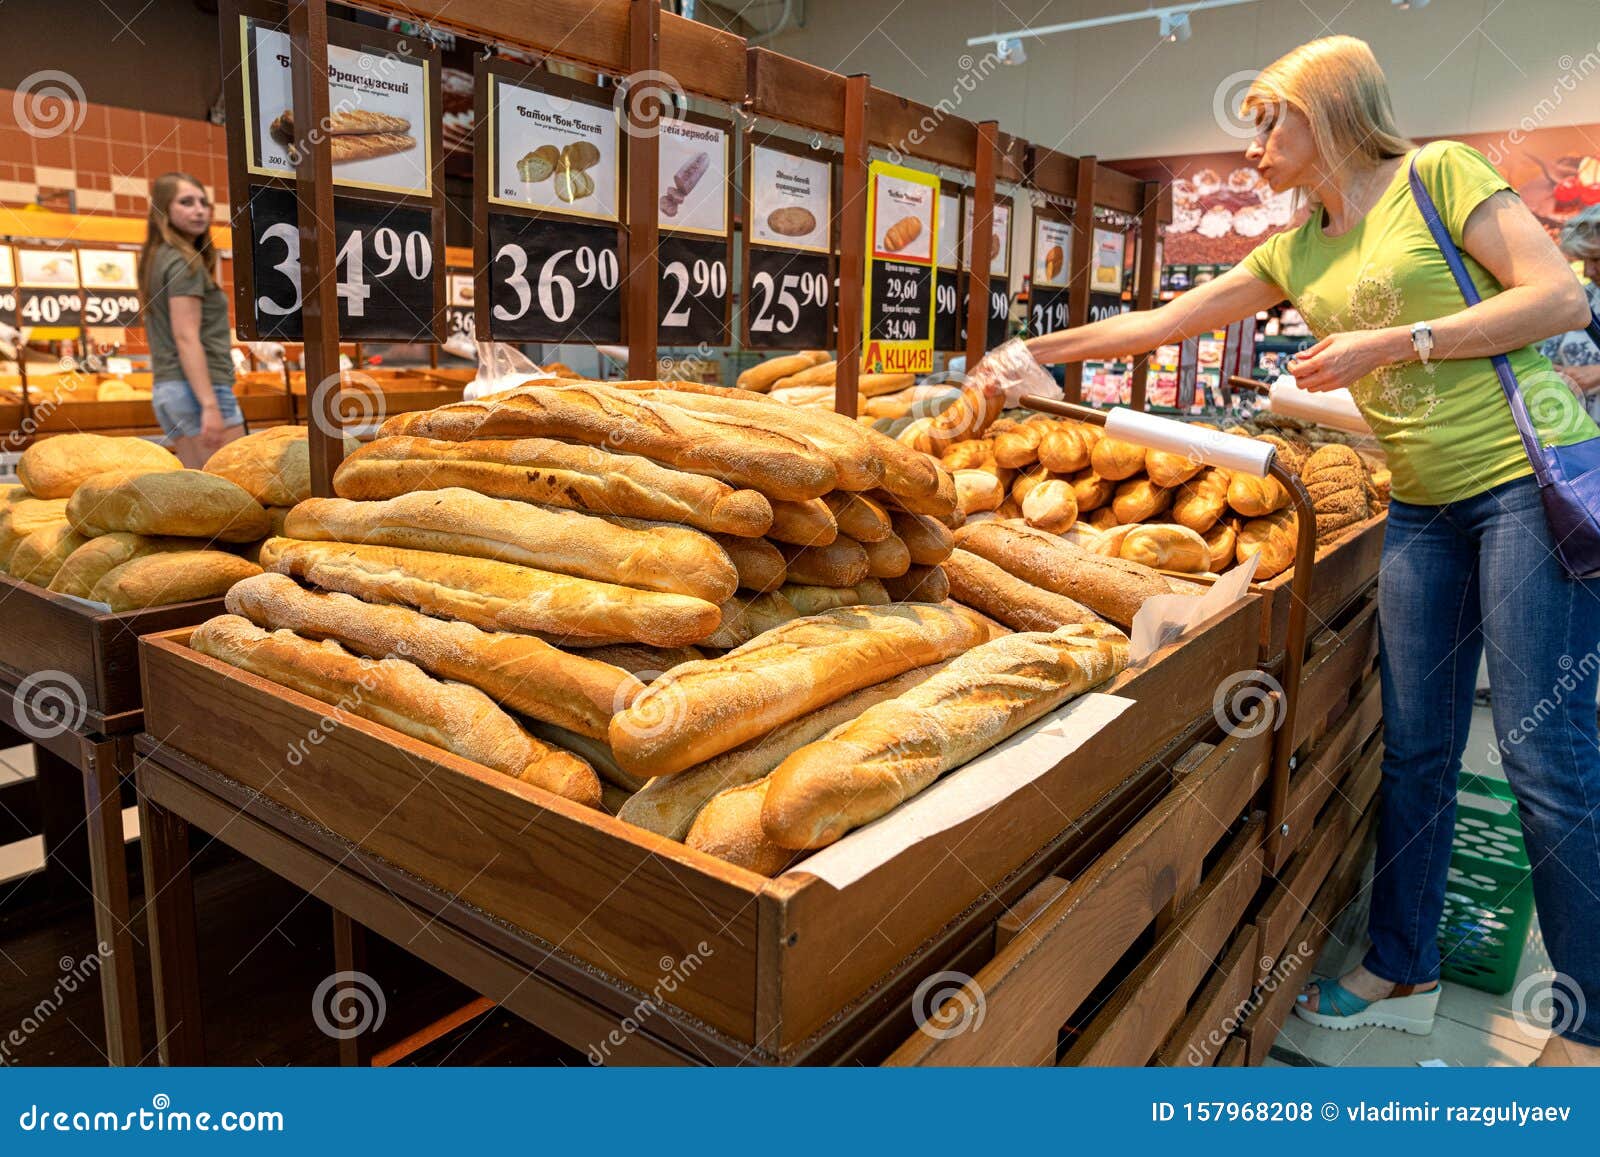 Krasnoyarsk, Russia, 27 Augus 2019: a Woman Buys Baguettes in a Bakery